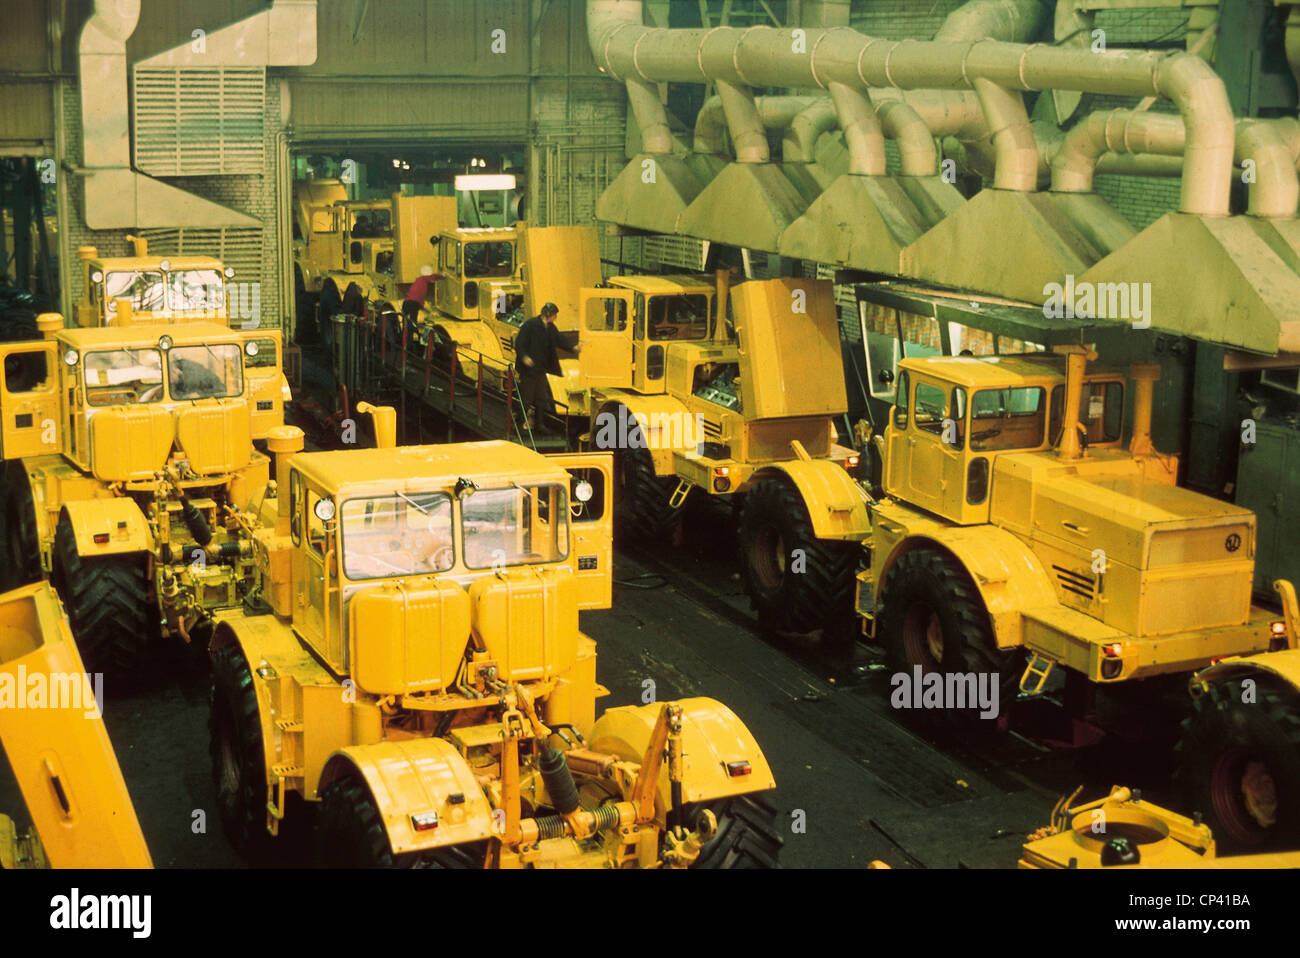 Russia XX century. Eighties - tractor factory Stock Photo